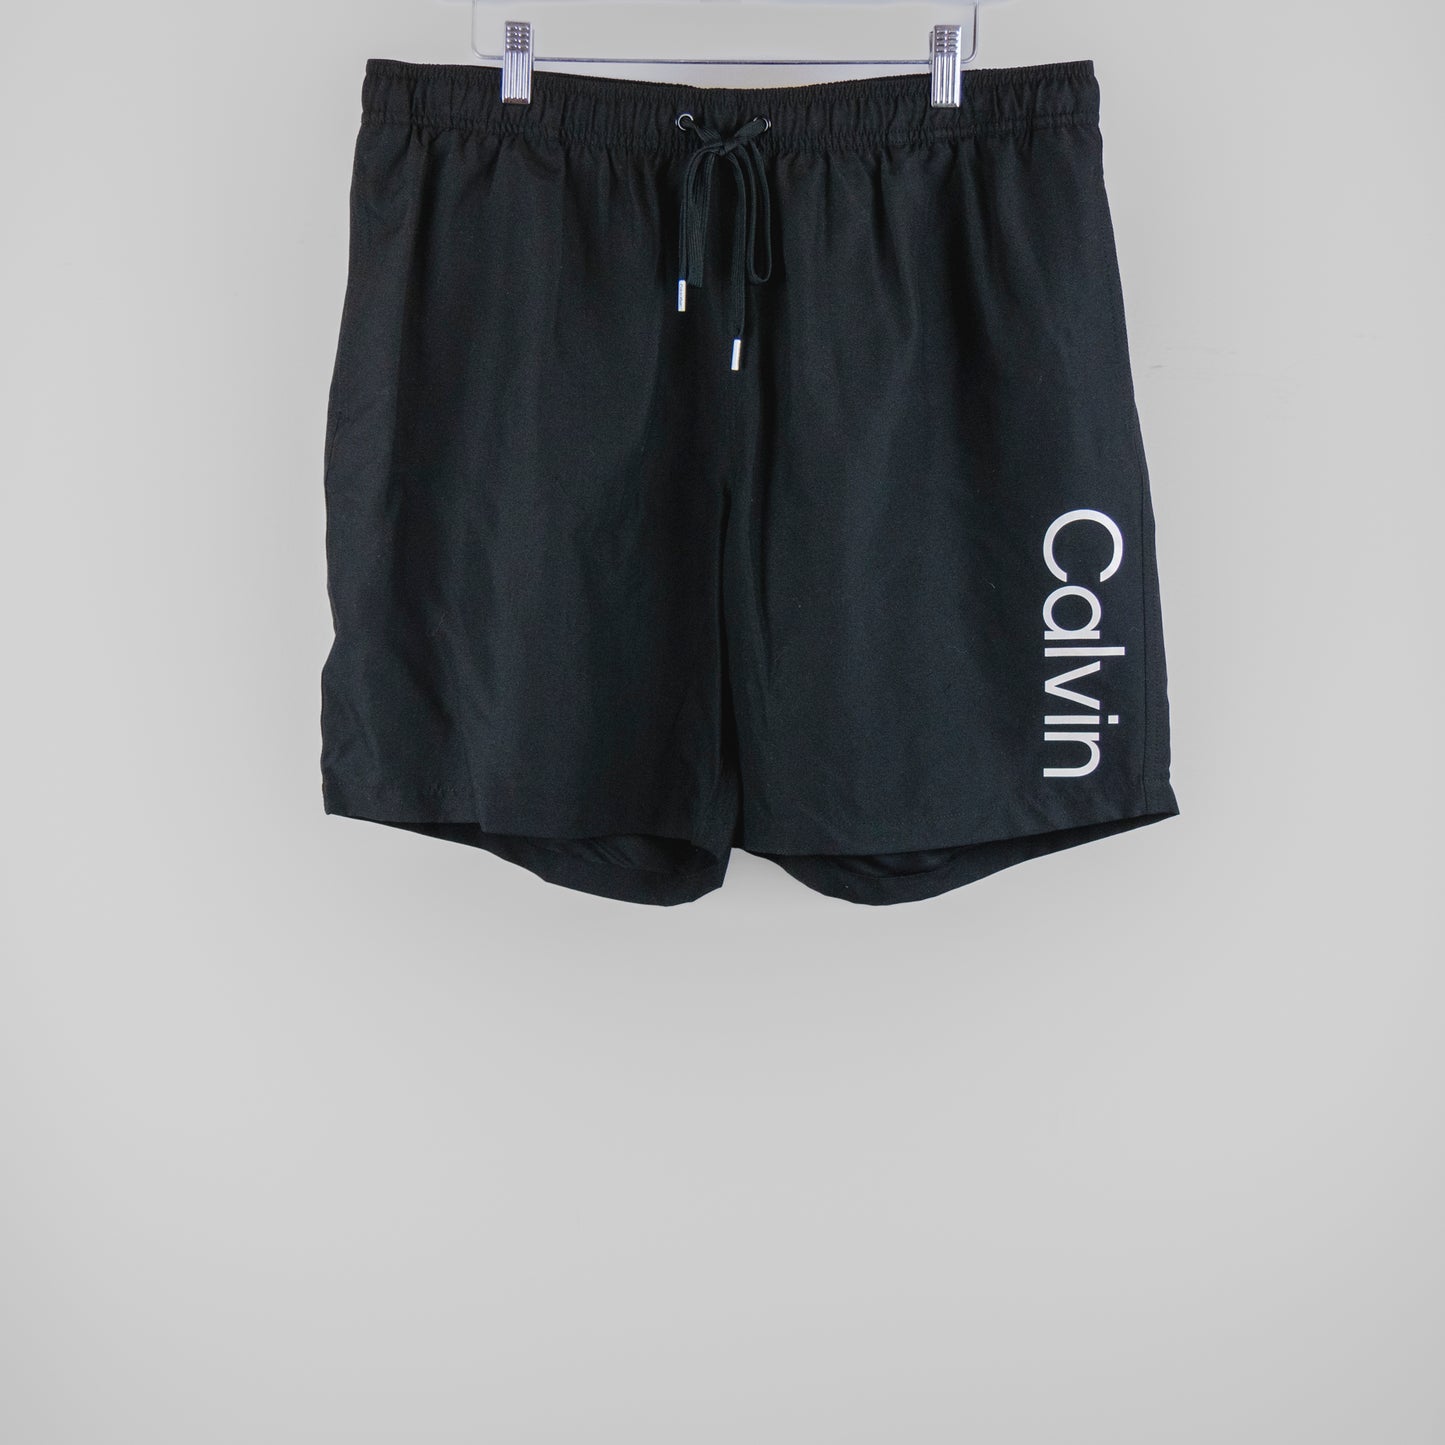 Calvin Klein - Standard UV Protected Quick Dry Swim Trunk - Black